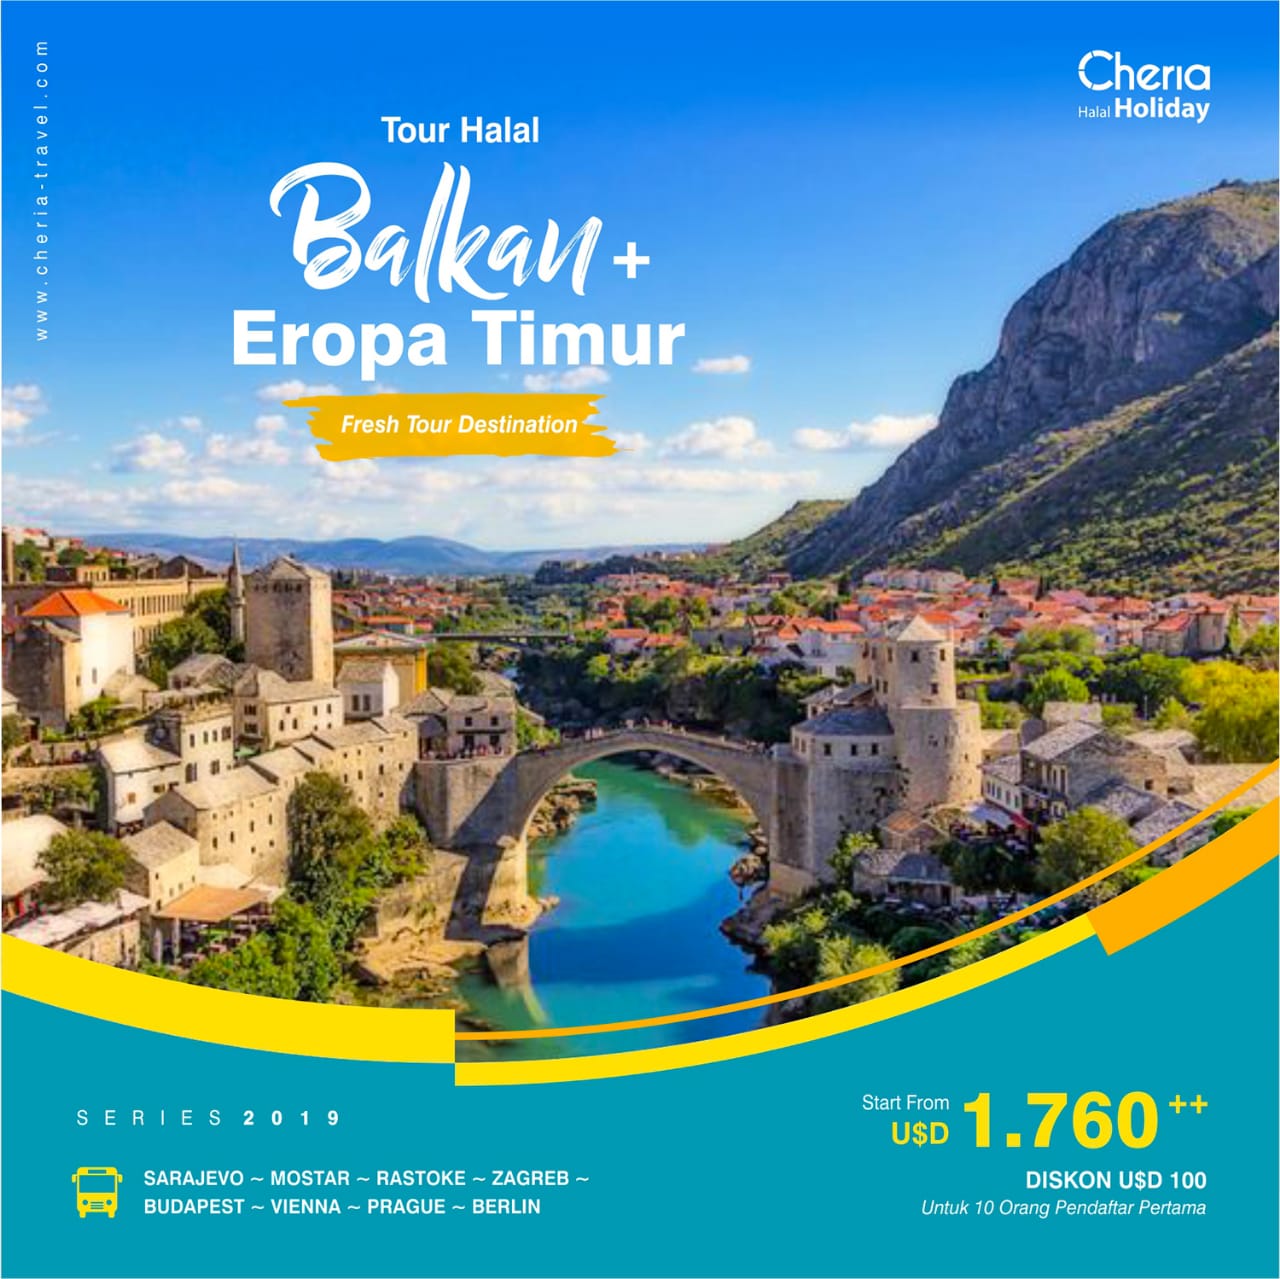 Paket Tour Halal Eropa Timur + Balkan Cheria Holiday